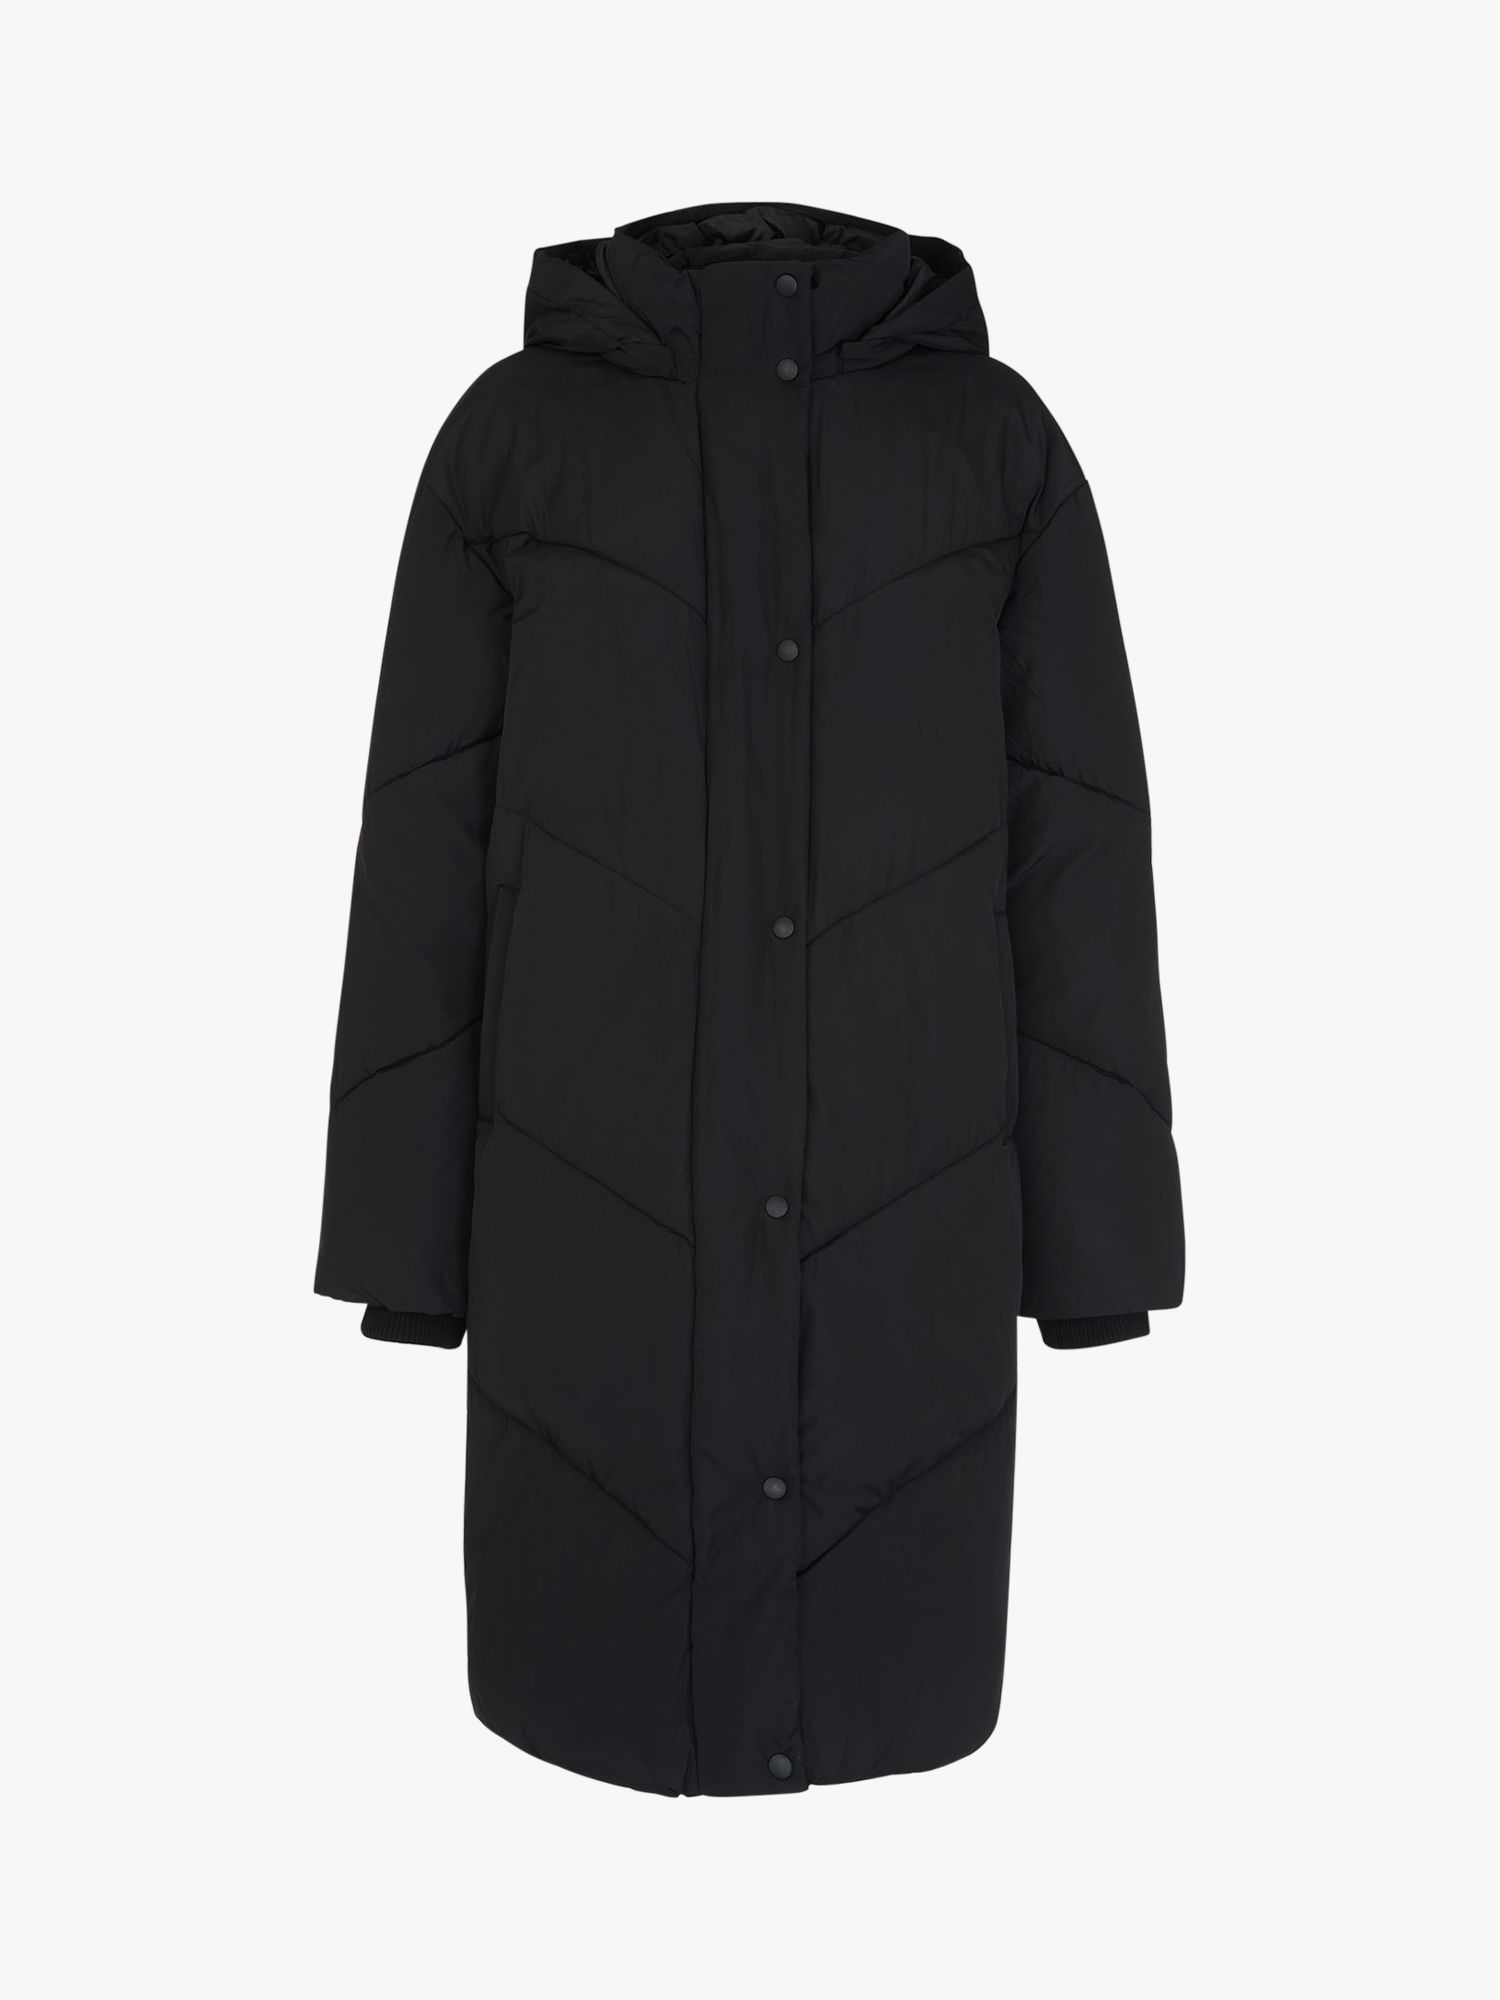 Whistles Tessa Hooded Longline Coat, Black at John Lewis & Partners